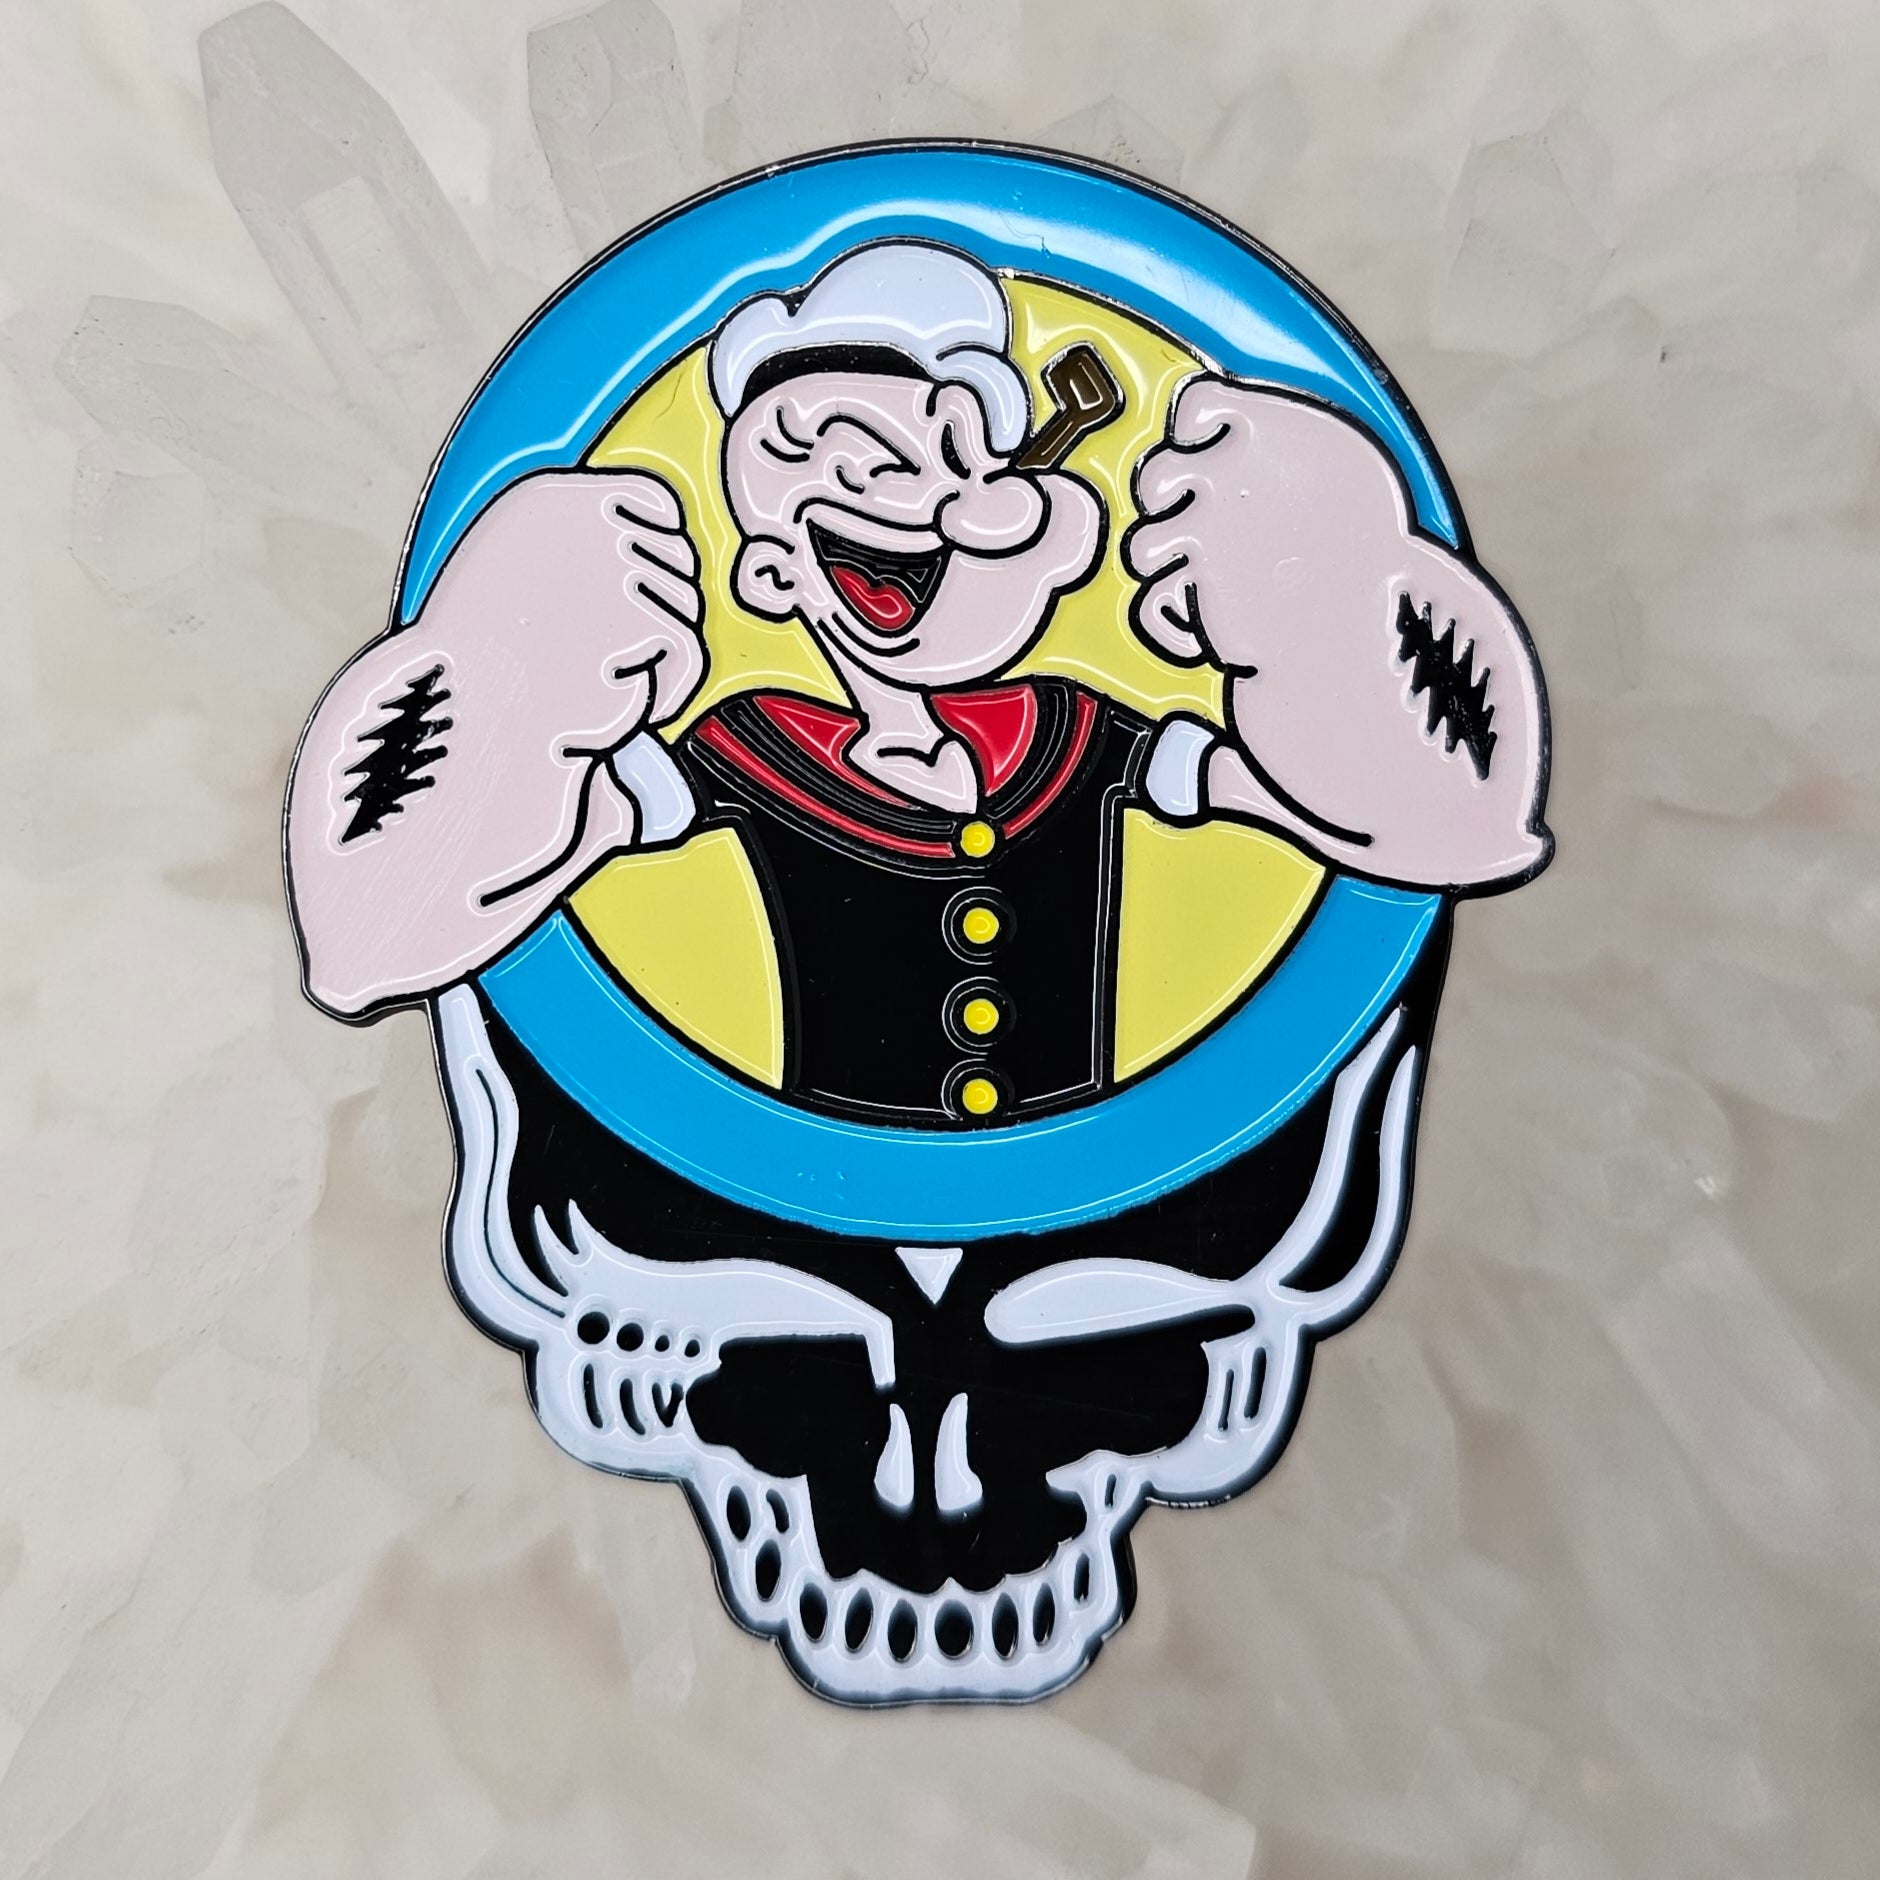 Grateful Popeye The Sailor Dead Head Shakedown Cartoon Enamel Pins Hat Pins Lapel Pin Brooch Badge Festival Pin